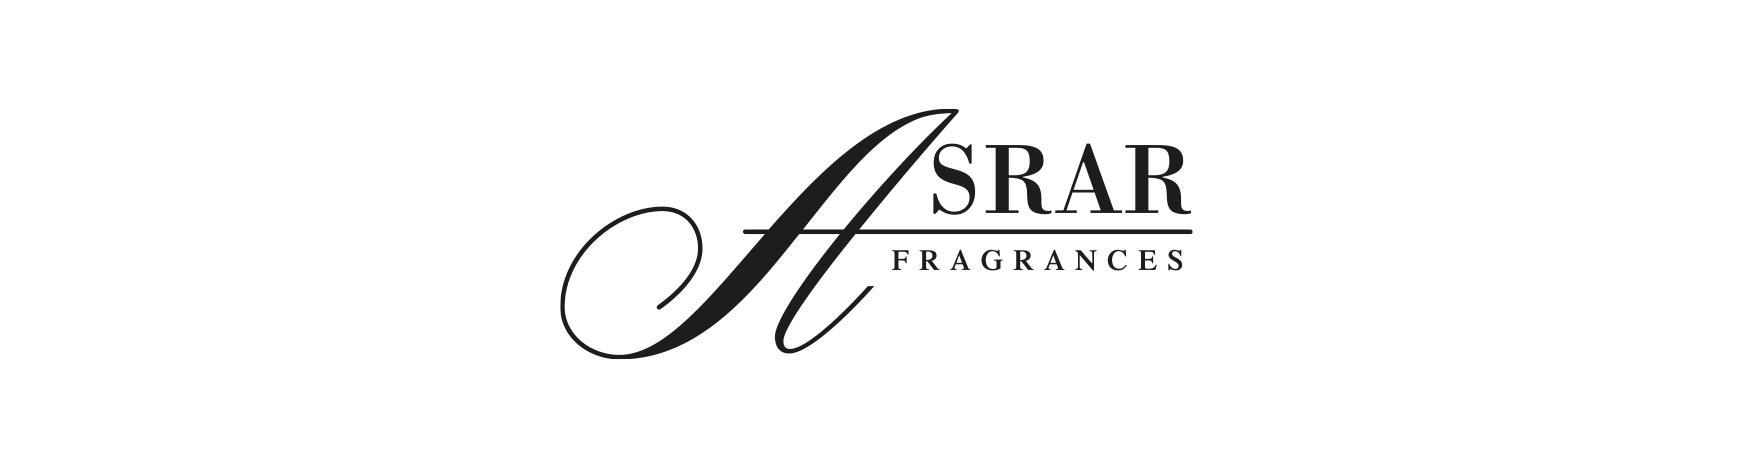 Asrar Fragrances